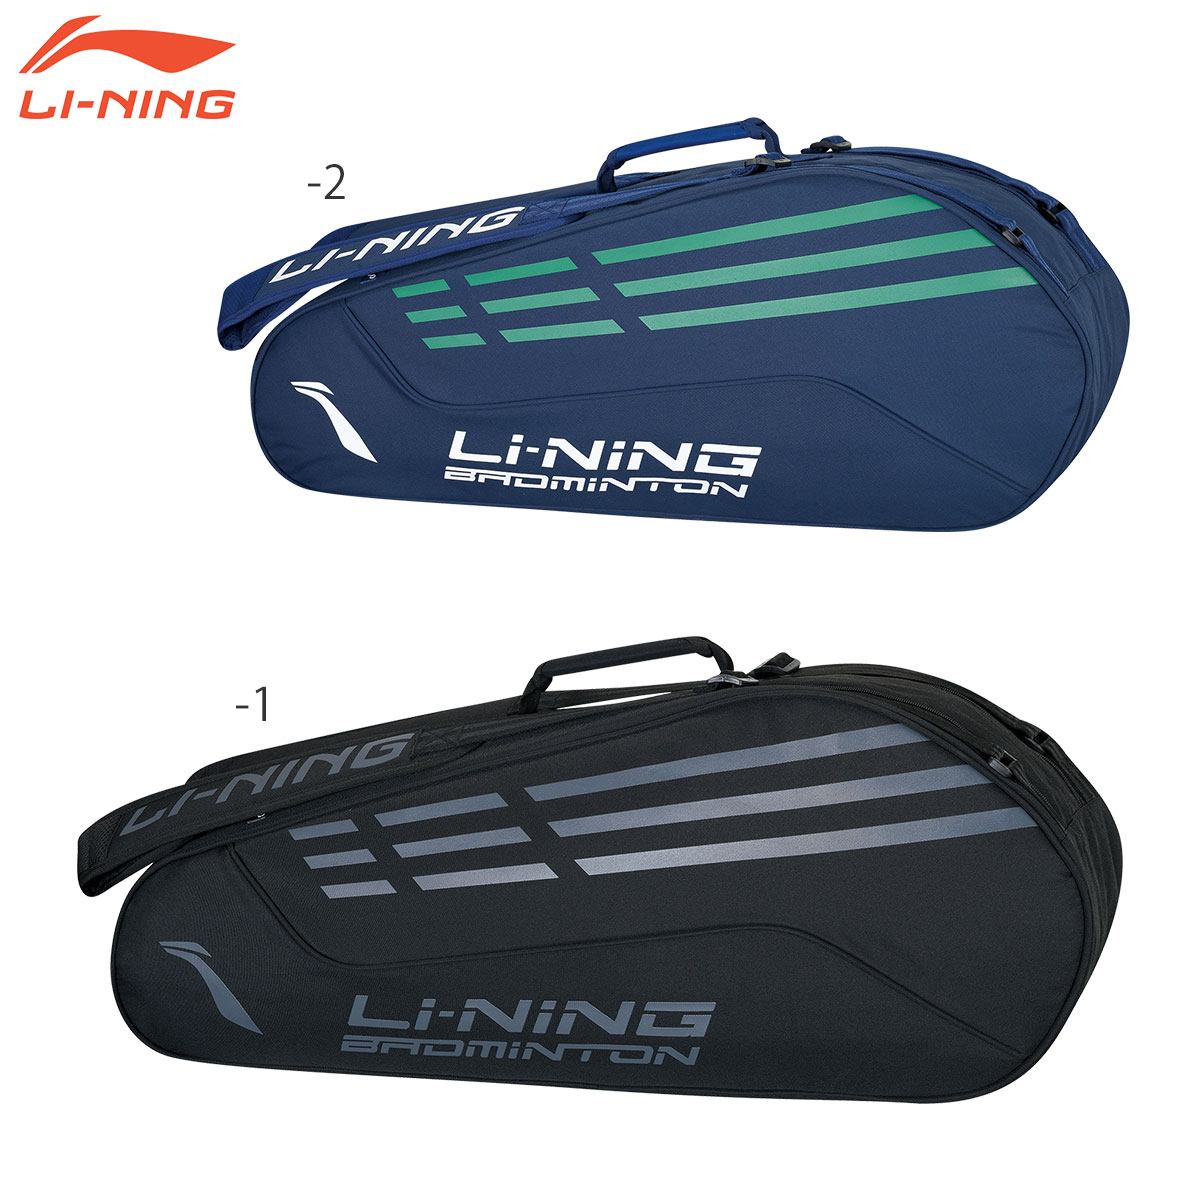 LI-NING ABJN018-2 ブルー ラケットバッグ 6本用 バドミントン リーニン - 1